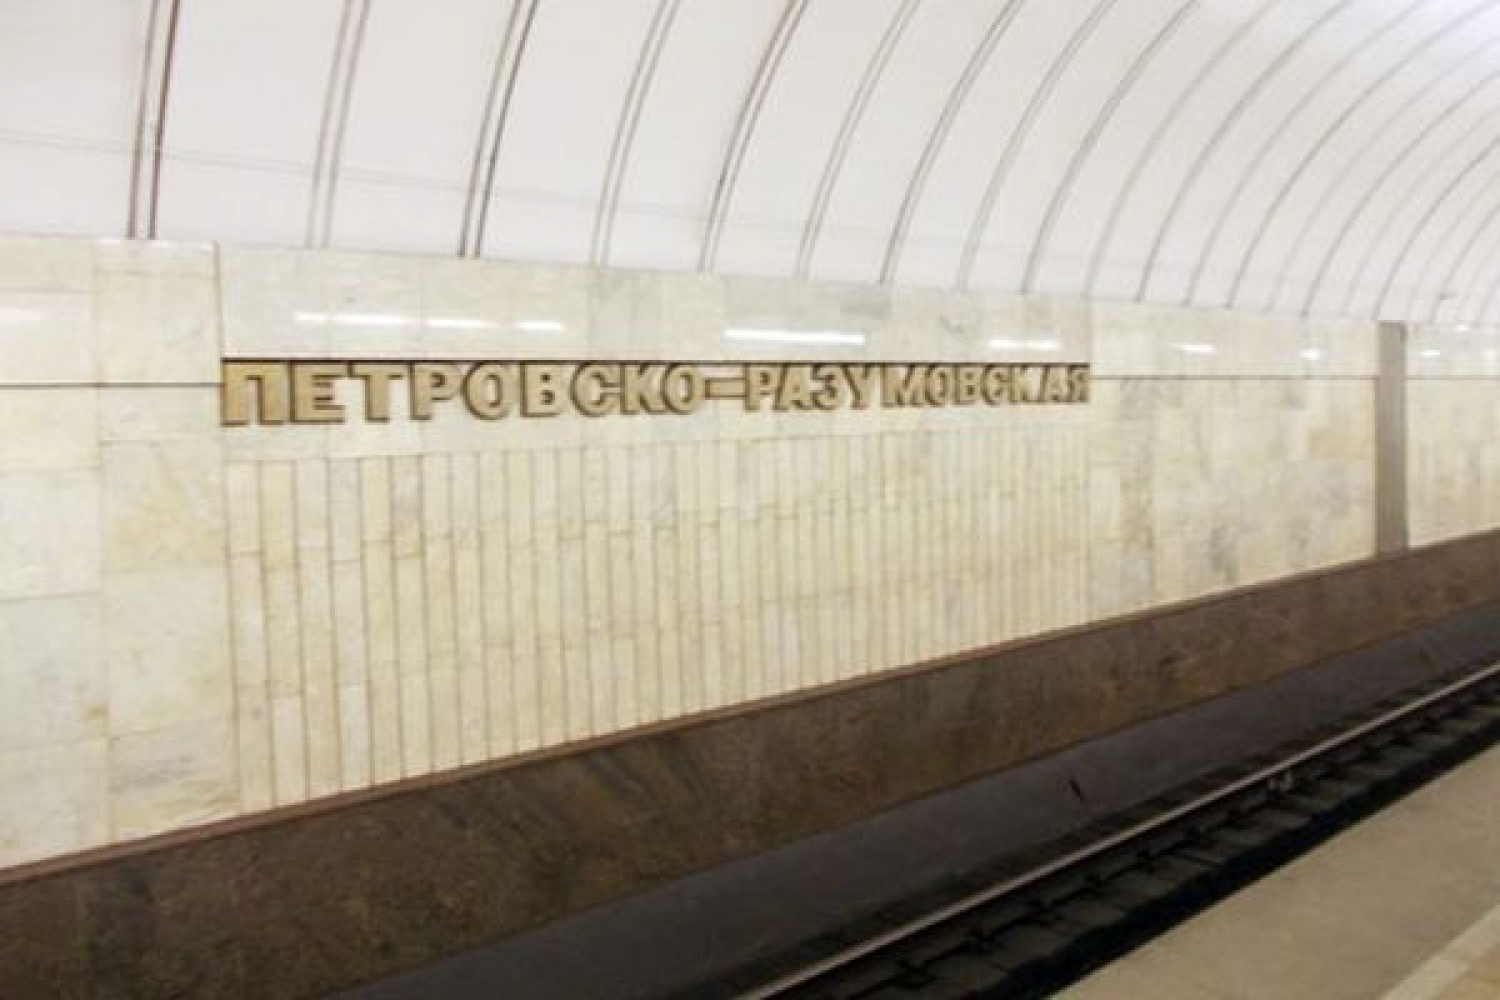 петровский разумовский метро